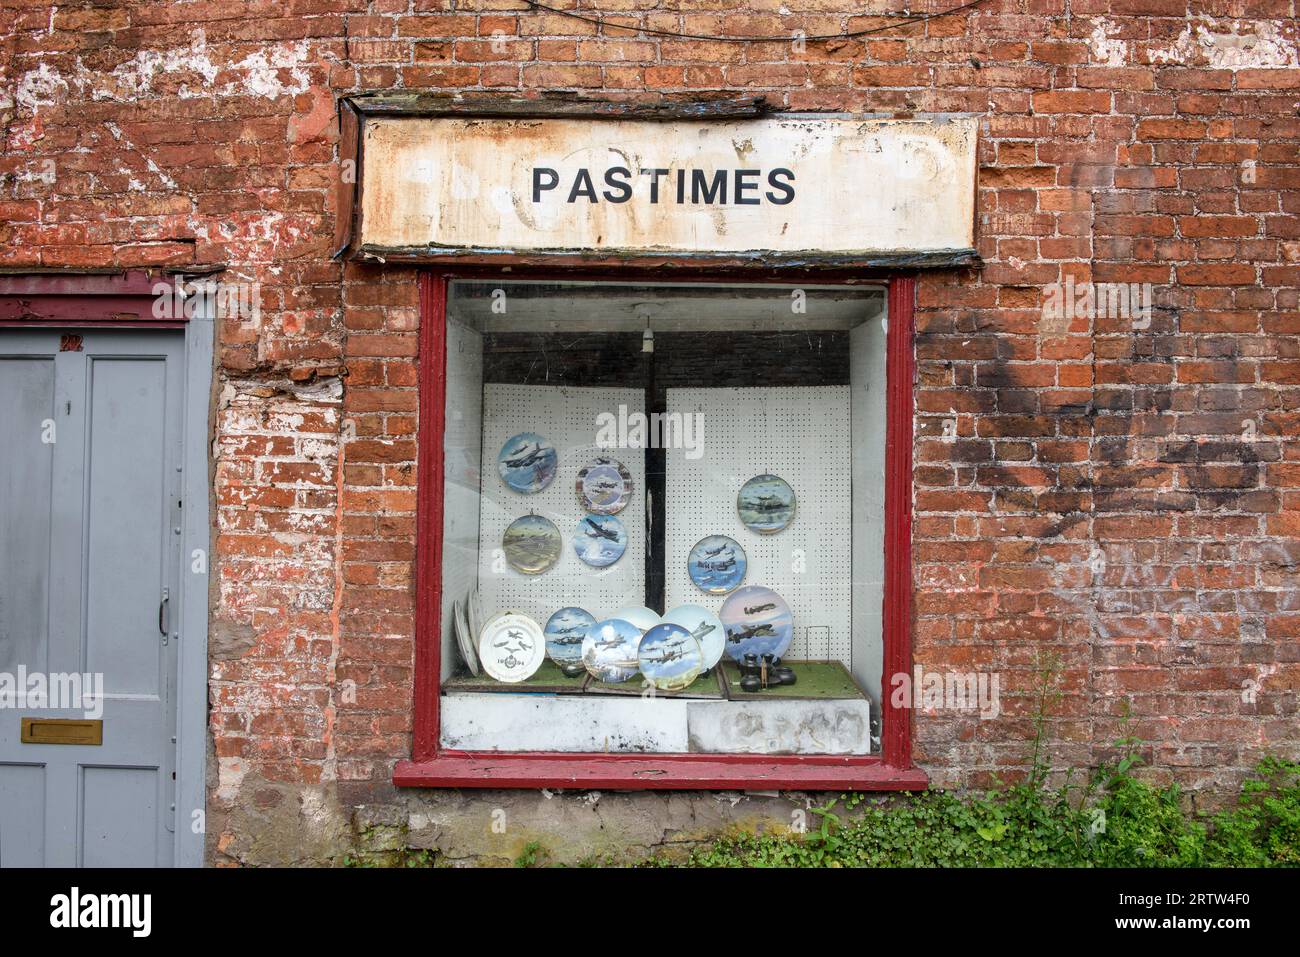 Pastimes the military memorabelia shop in Bristol UK Stock Photo